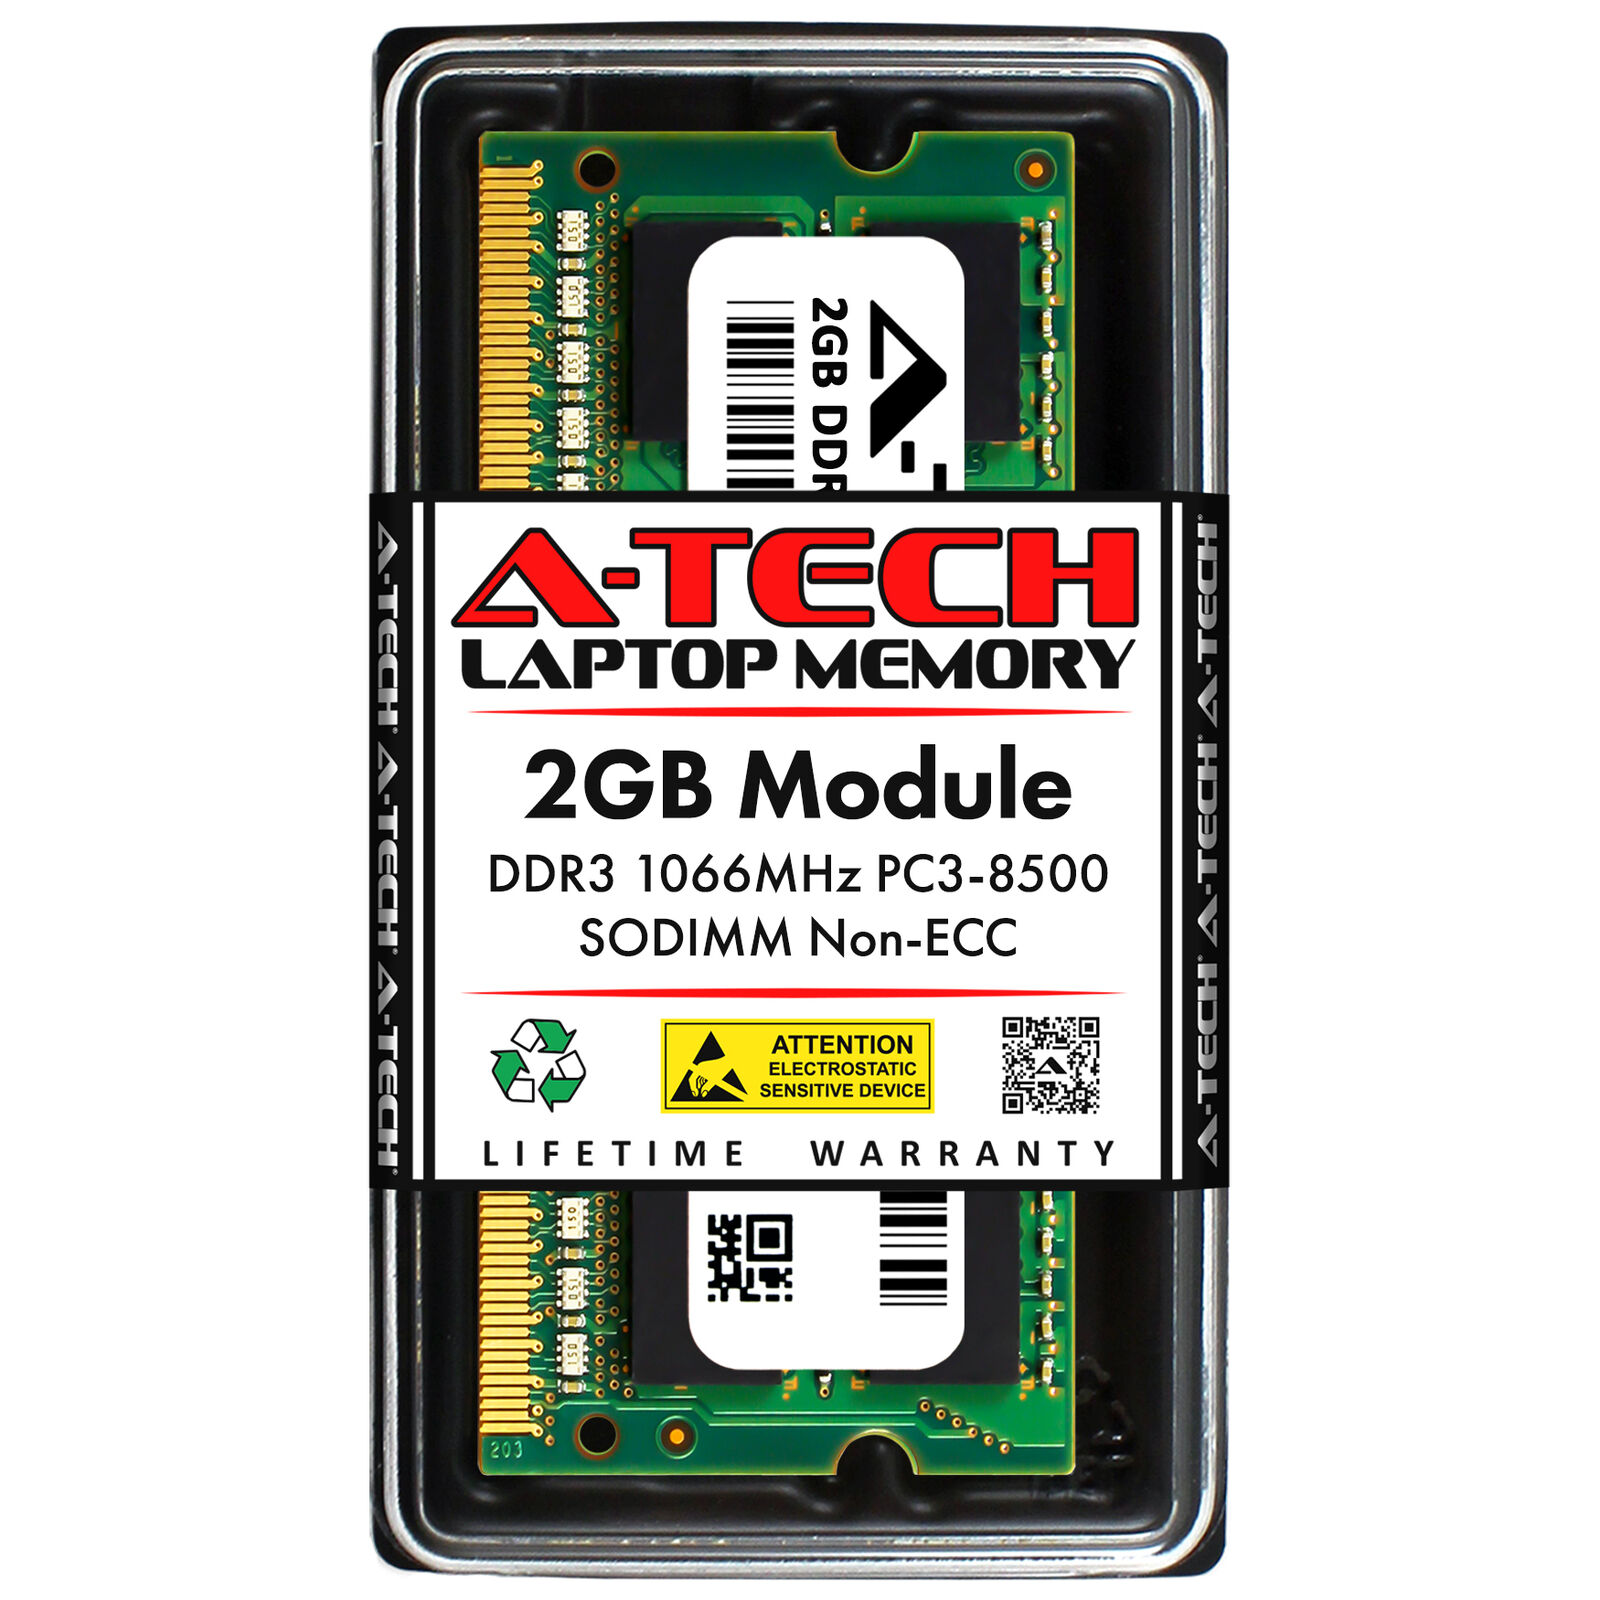 2GB STICK SODIMM DDR3 NON-ECC PC3-8500 1066MHz 1066 MHz DDR-3 2G 2 g Ram Memory